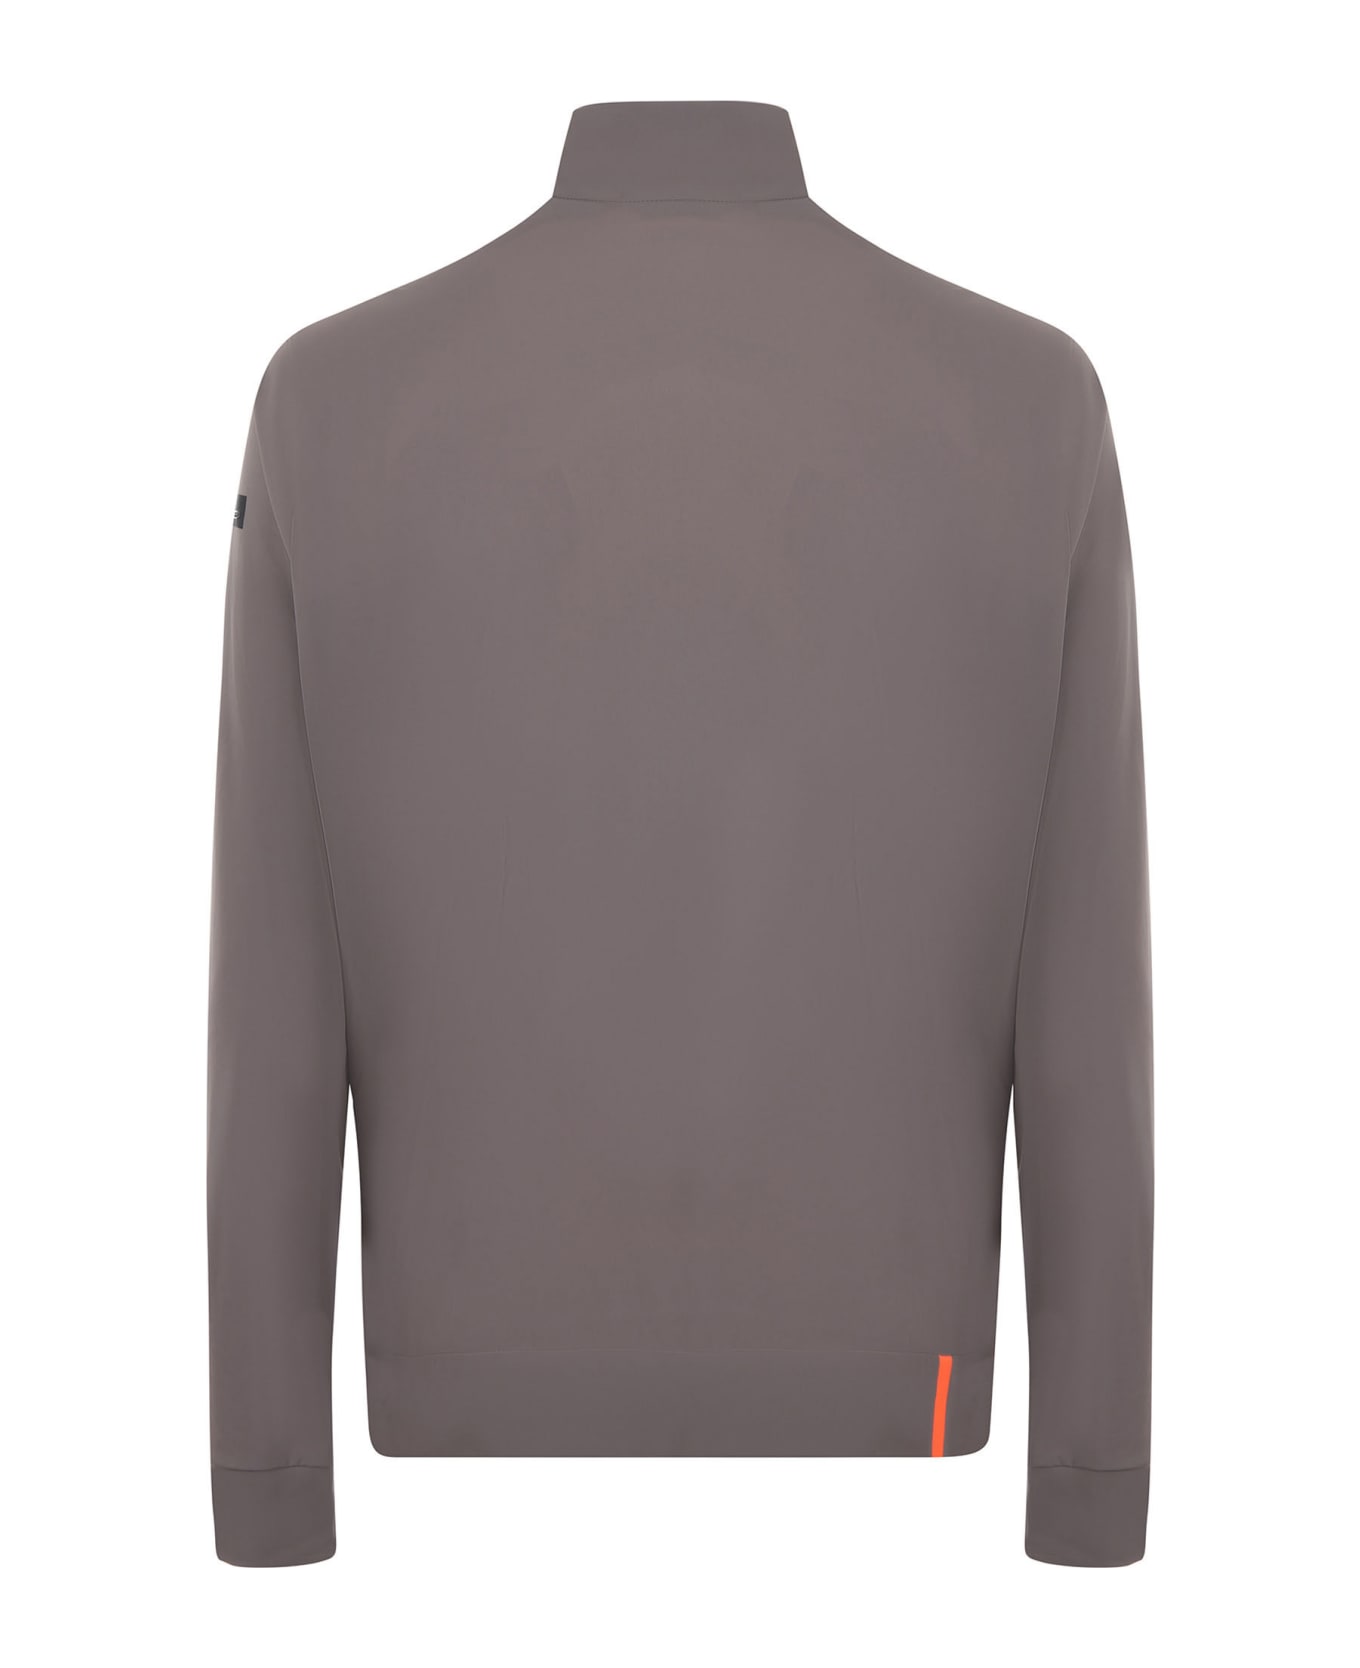 RRD - Roberto Ricci Design Beige Turtleneck Sweatshirt - Tortora